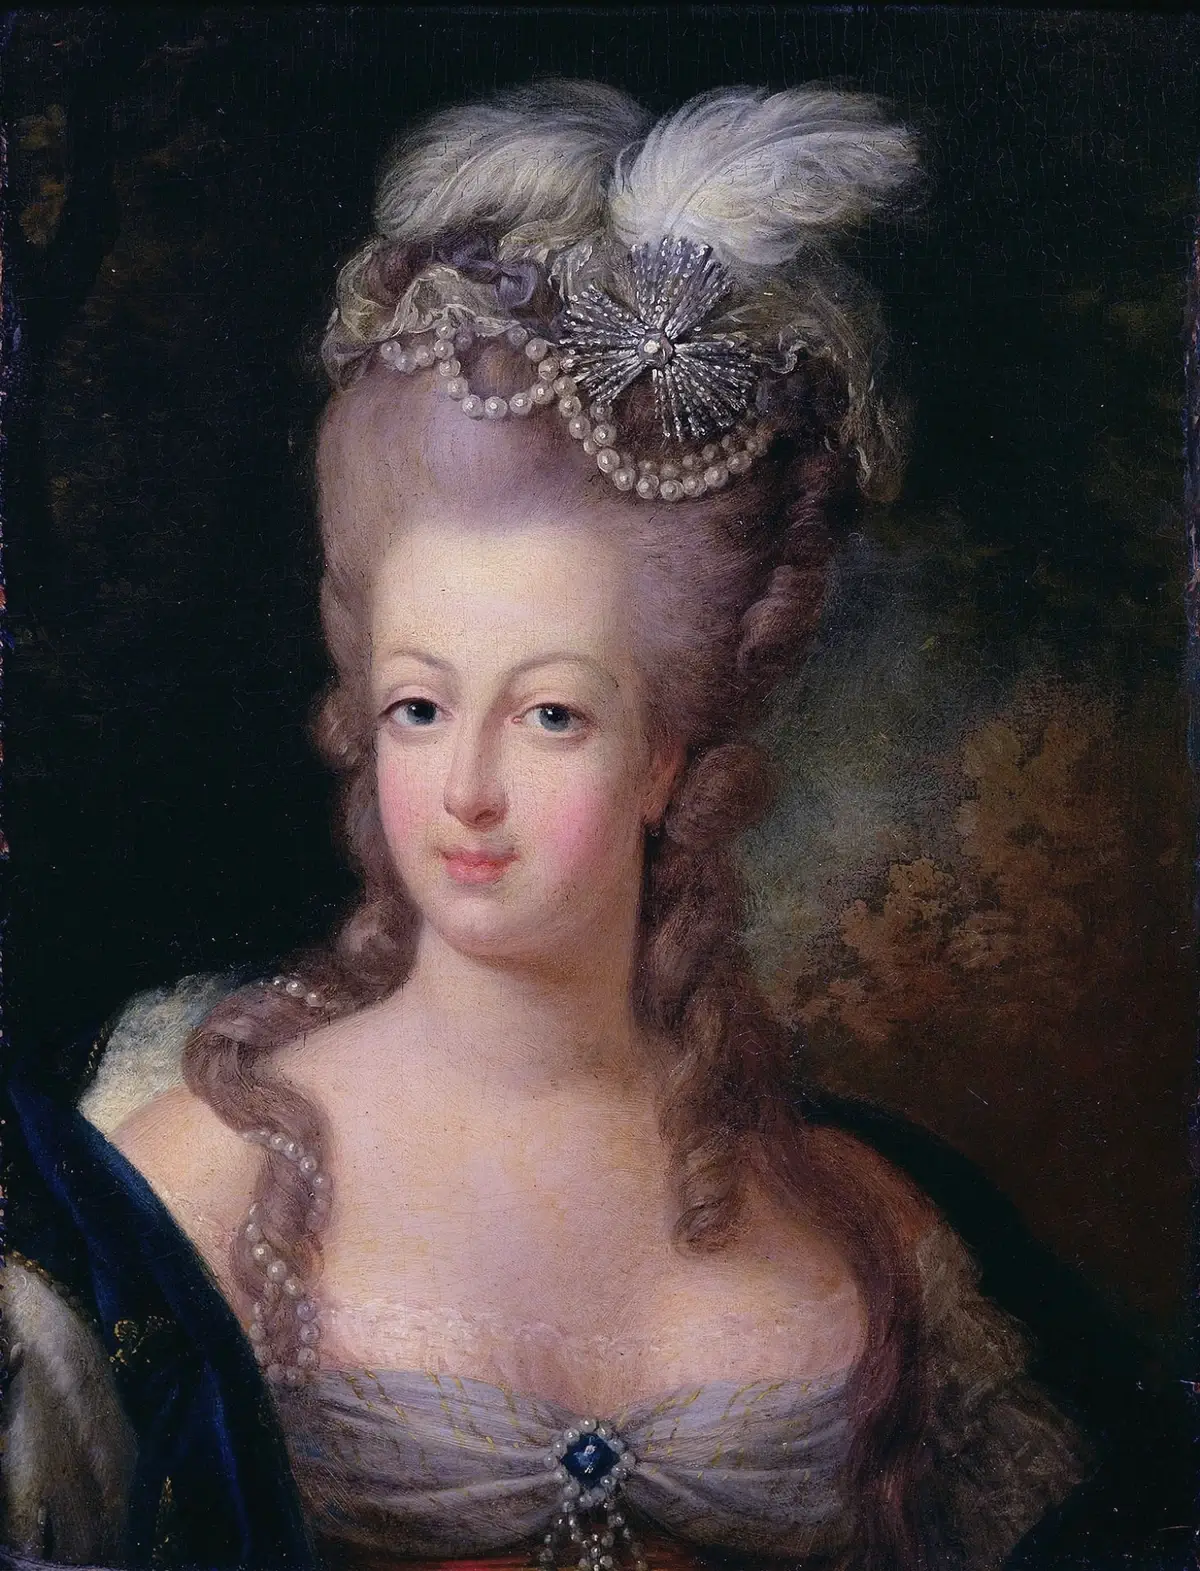 Portrait of Marie Antoinette showcasing her elaborate hairstyle